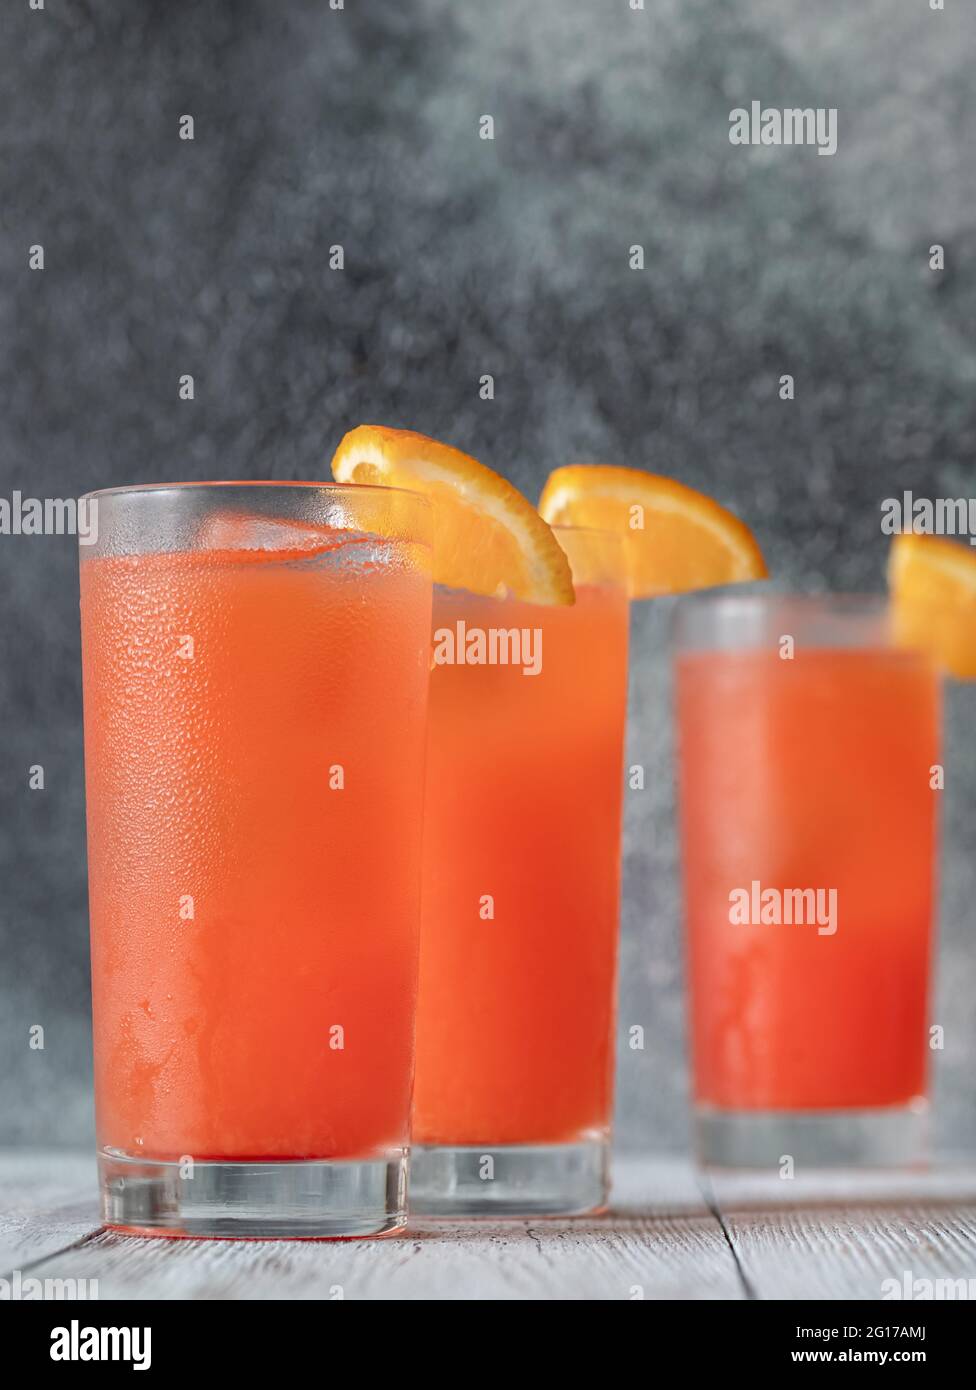 Verre d'Alabama Slammer cocktail garni d'une cale orange Banque D'Images